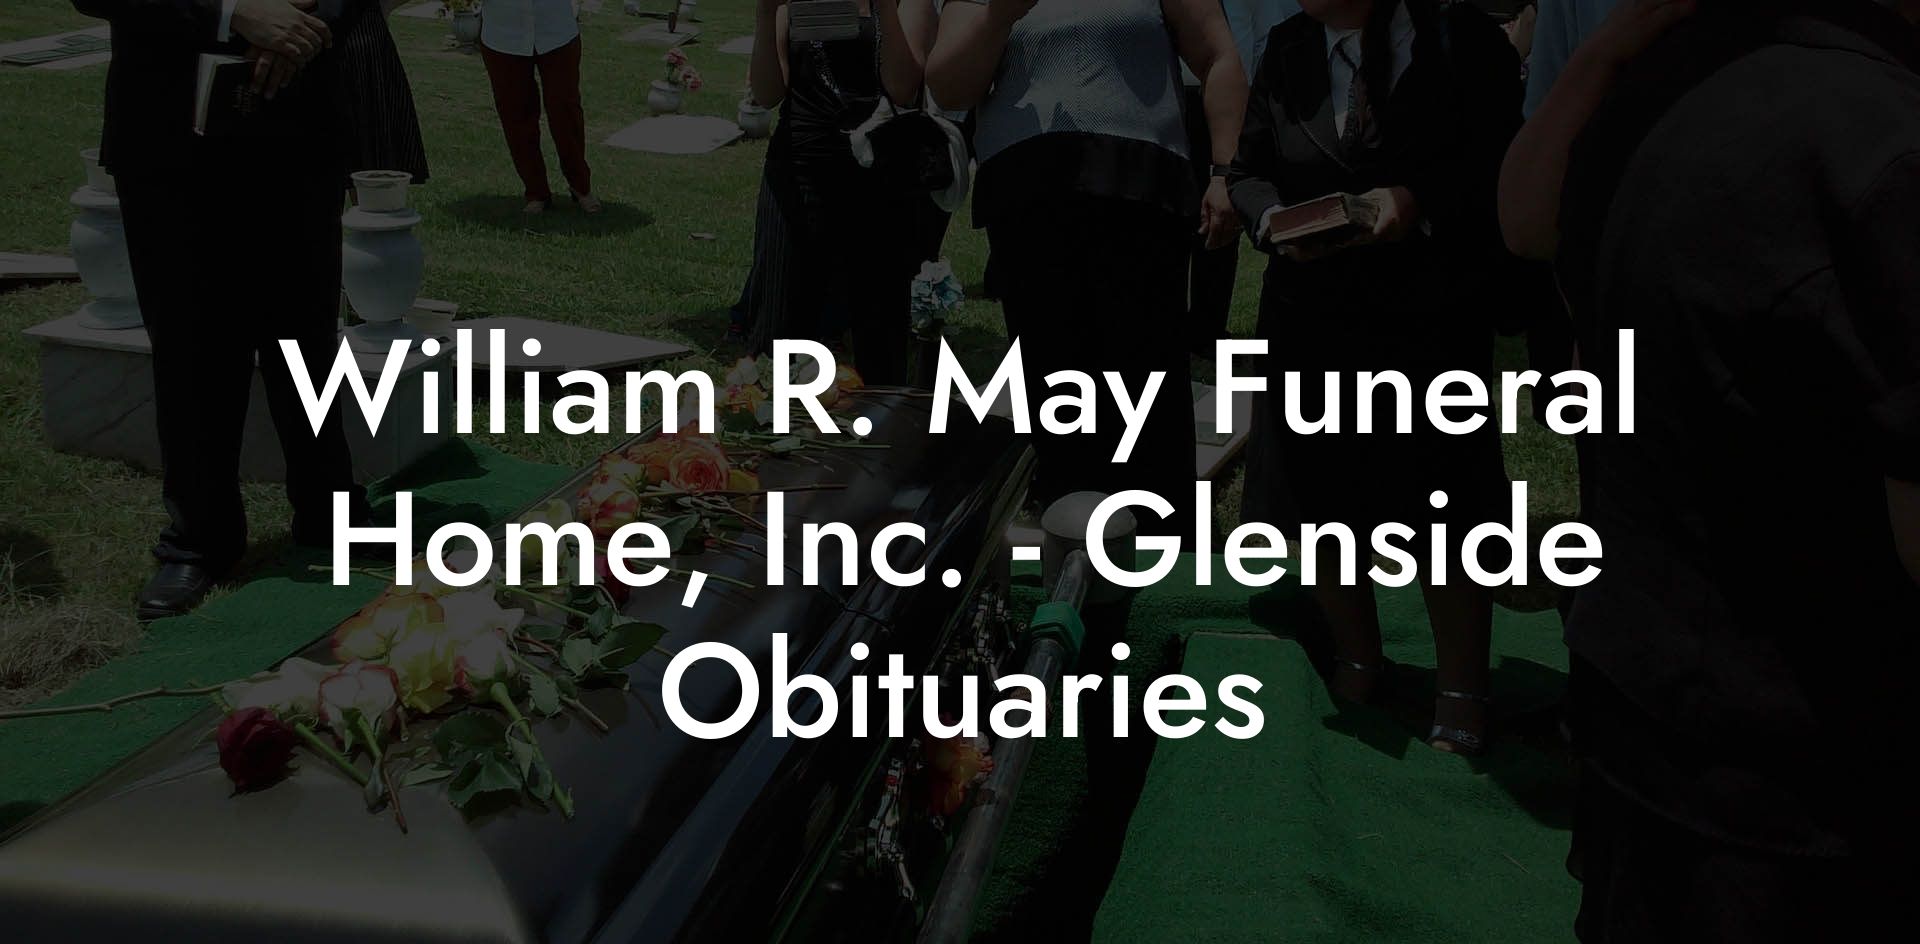 William R. May Funeral Home, Inc. - Glenside Obituaries